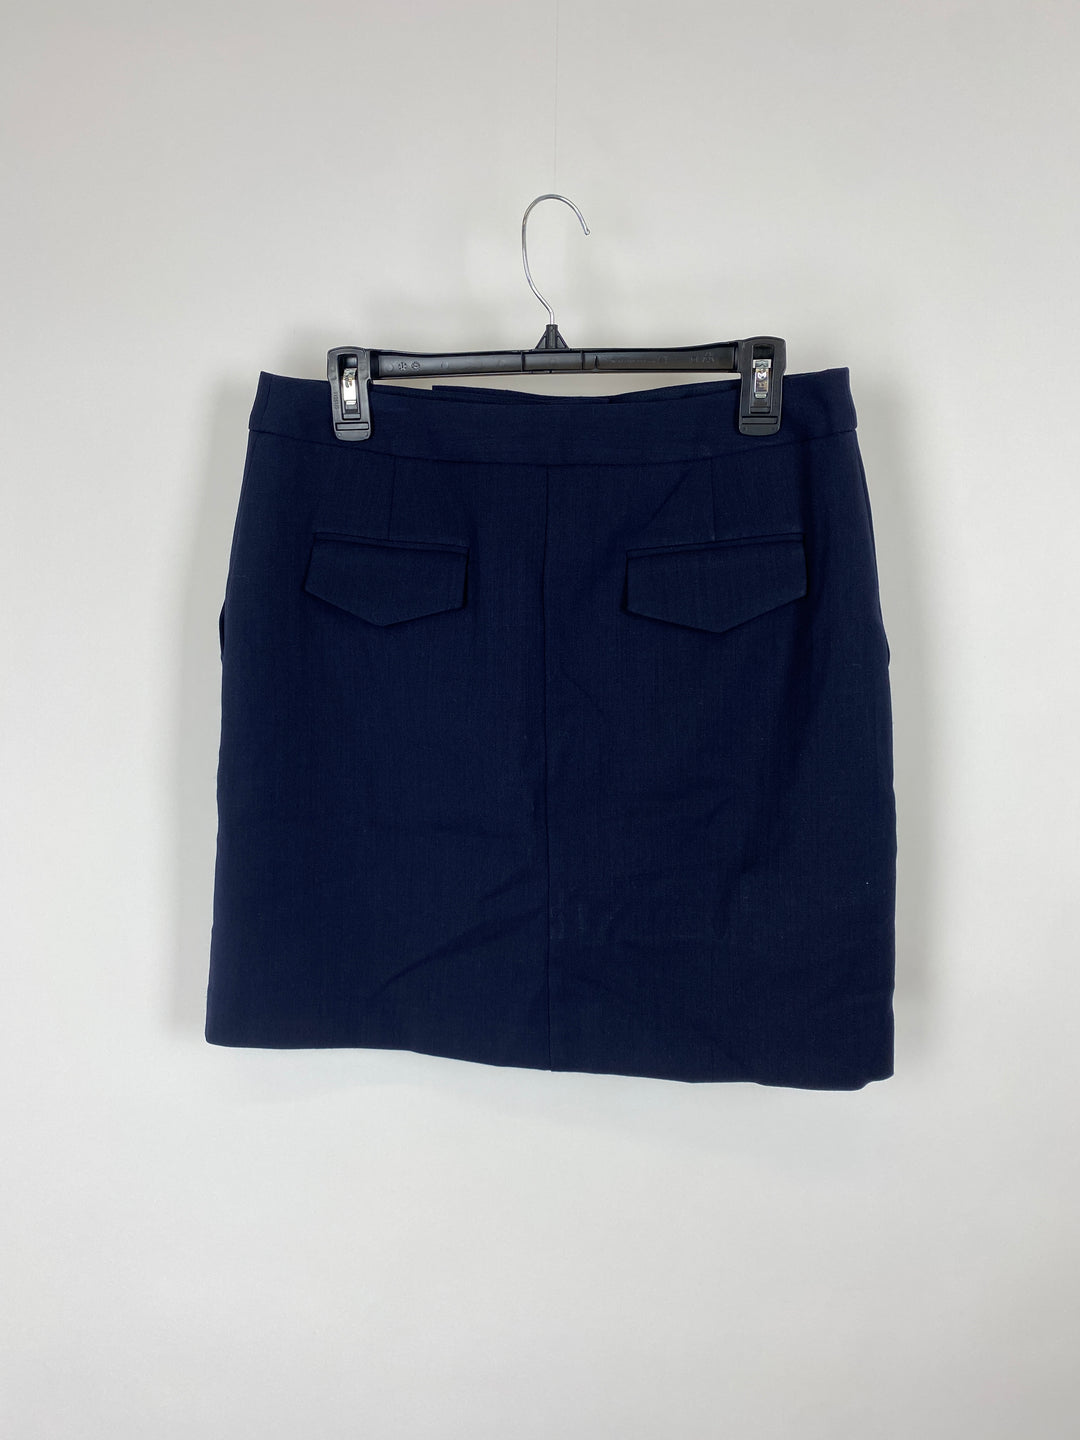 Navy Blue Skirt - Size 8